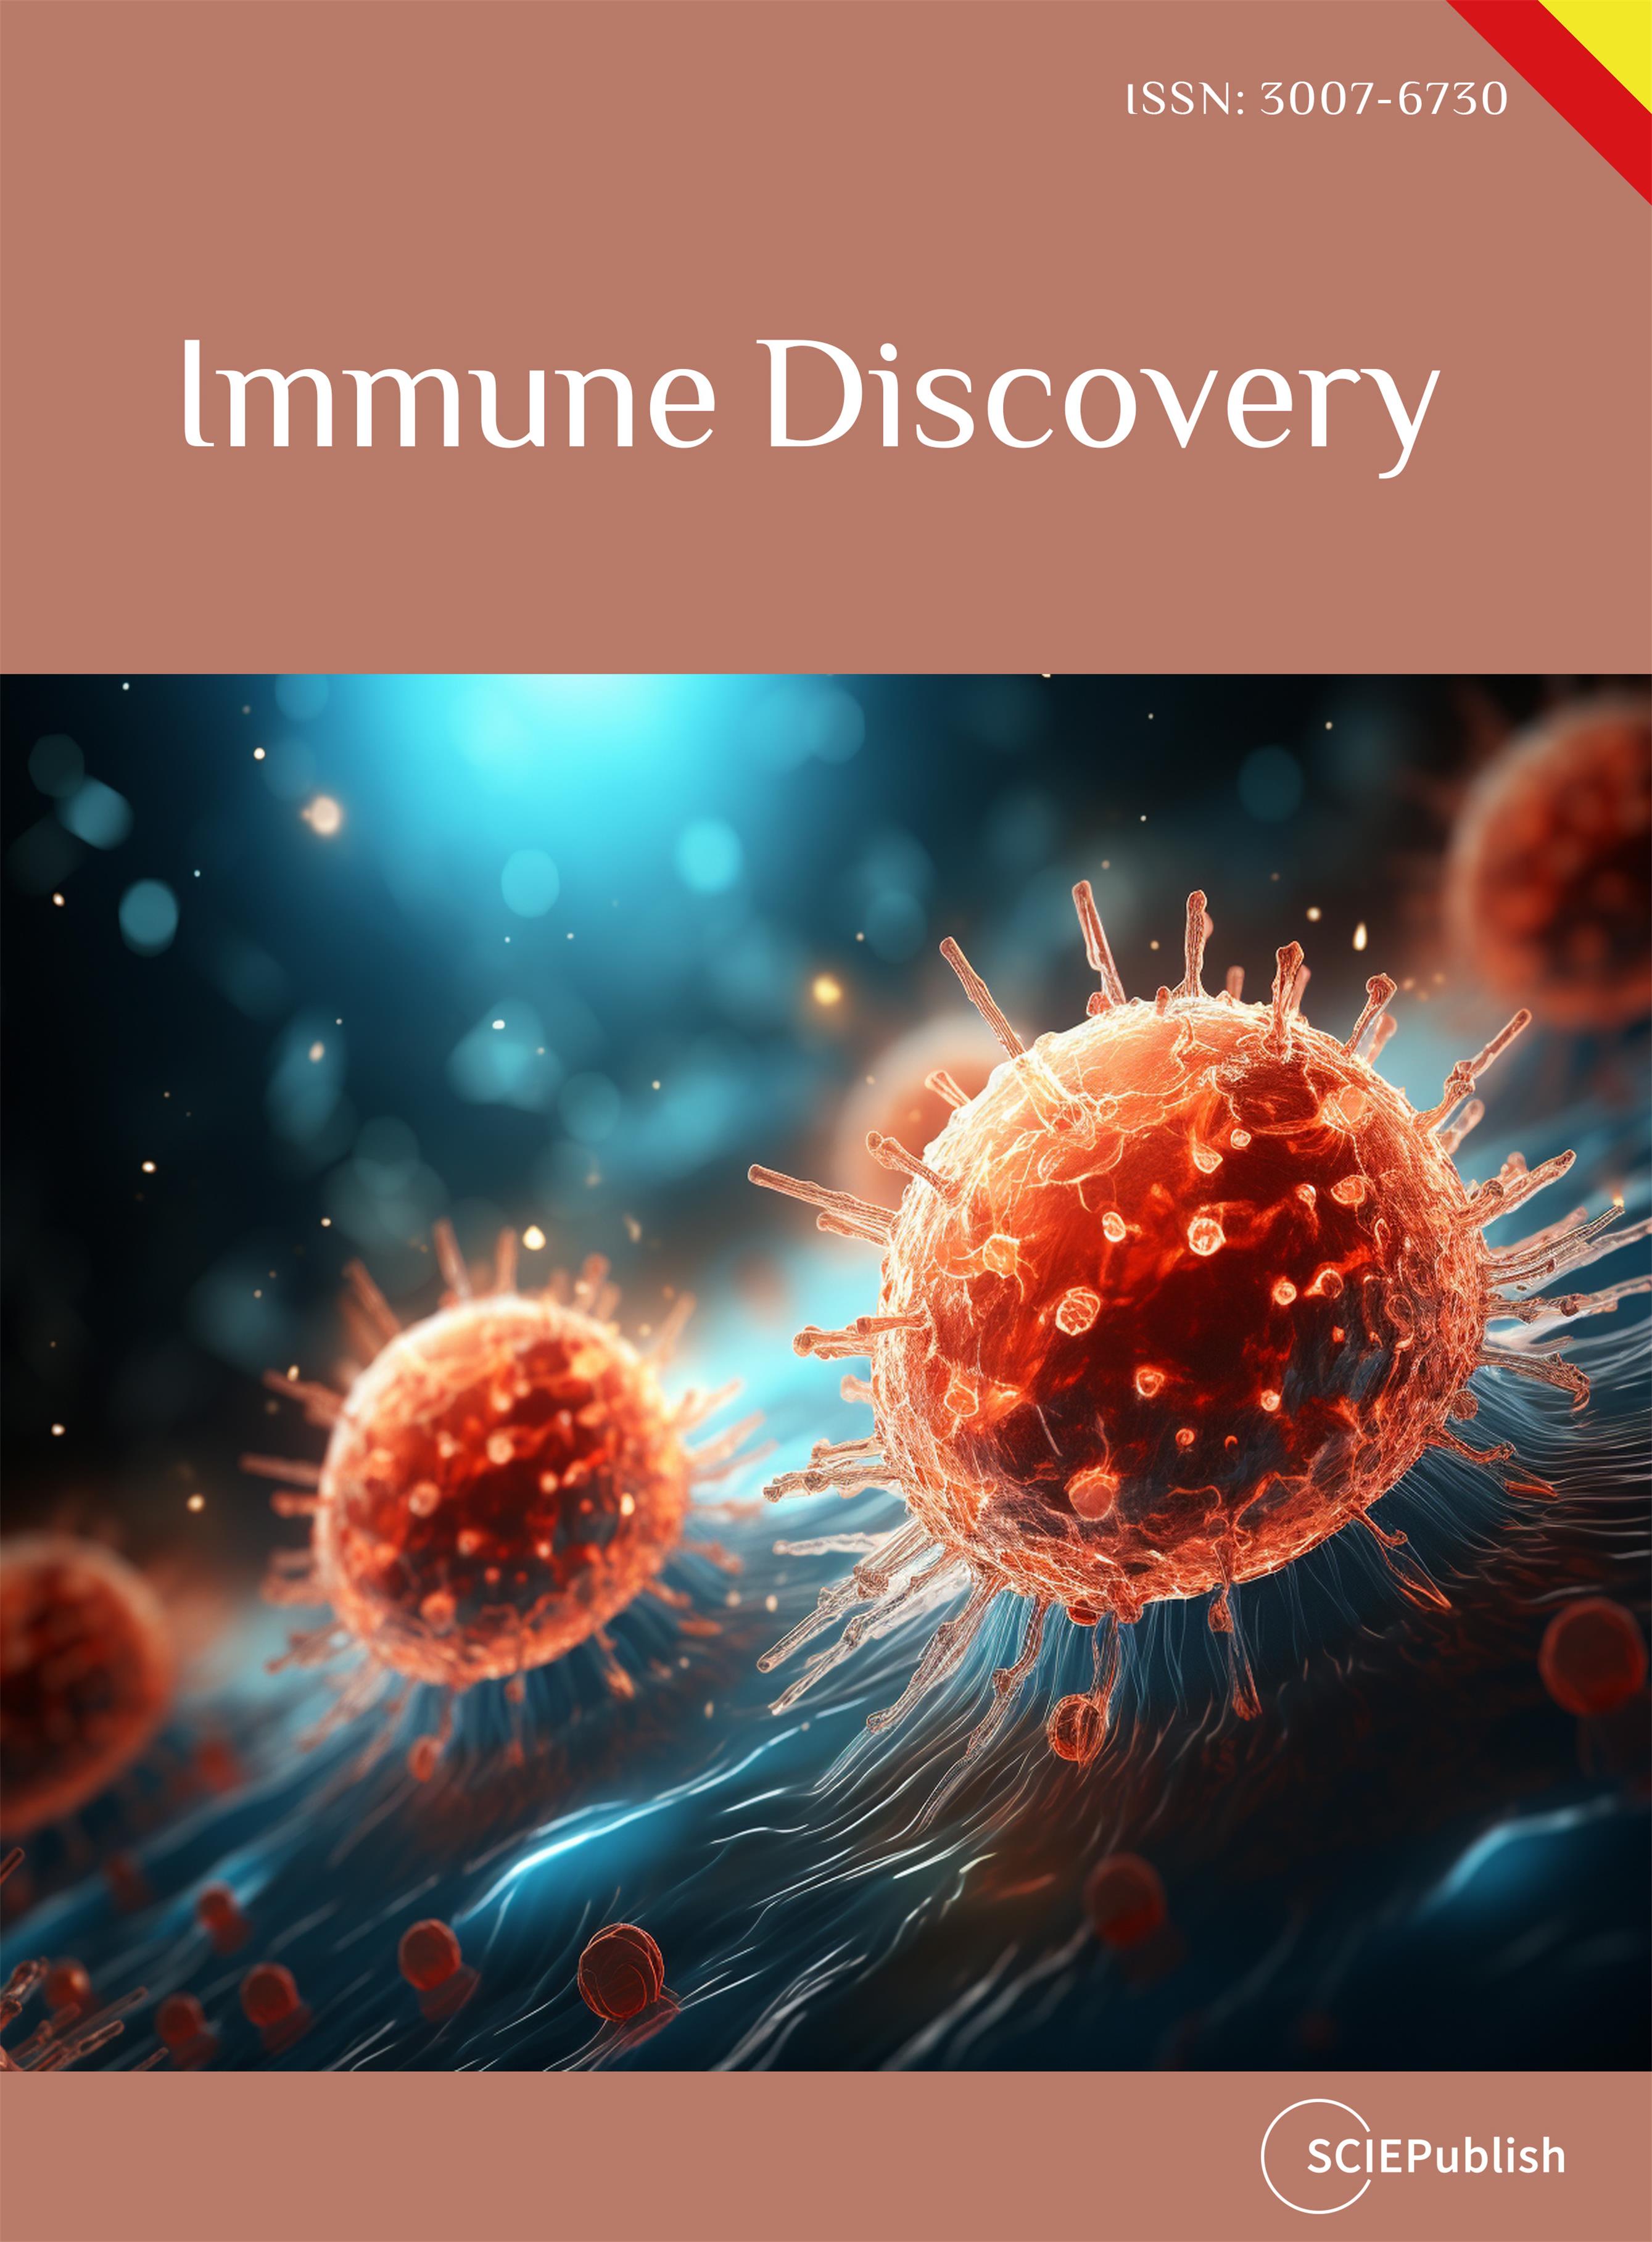 Immune Discovery-logo